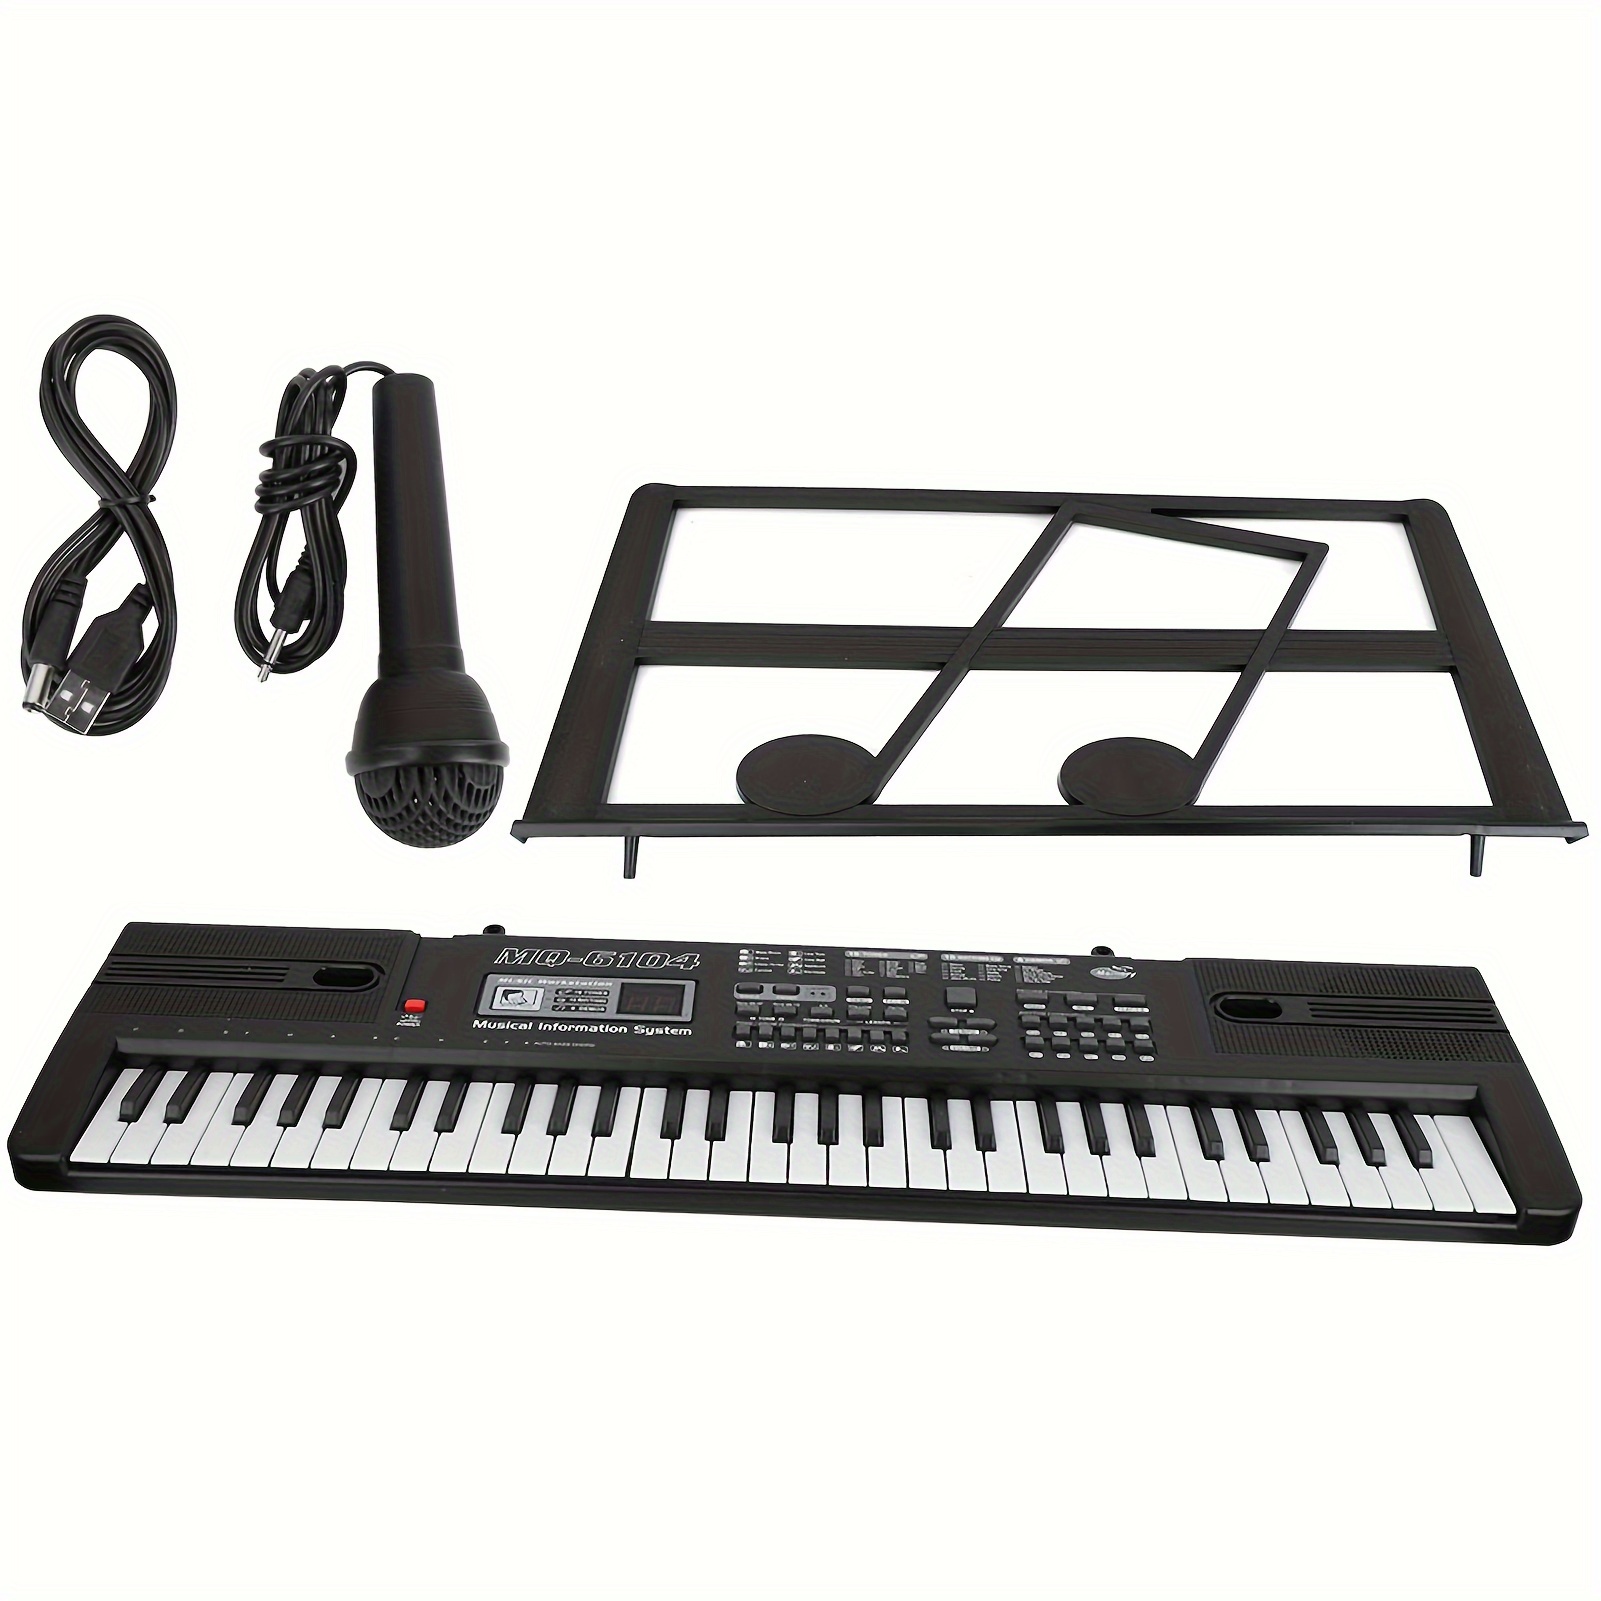 

61-key Digital Music Electronic Organ Portable Keyboard With Microphone